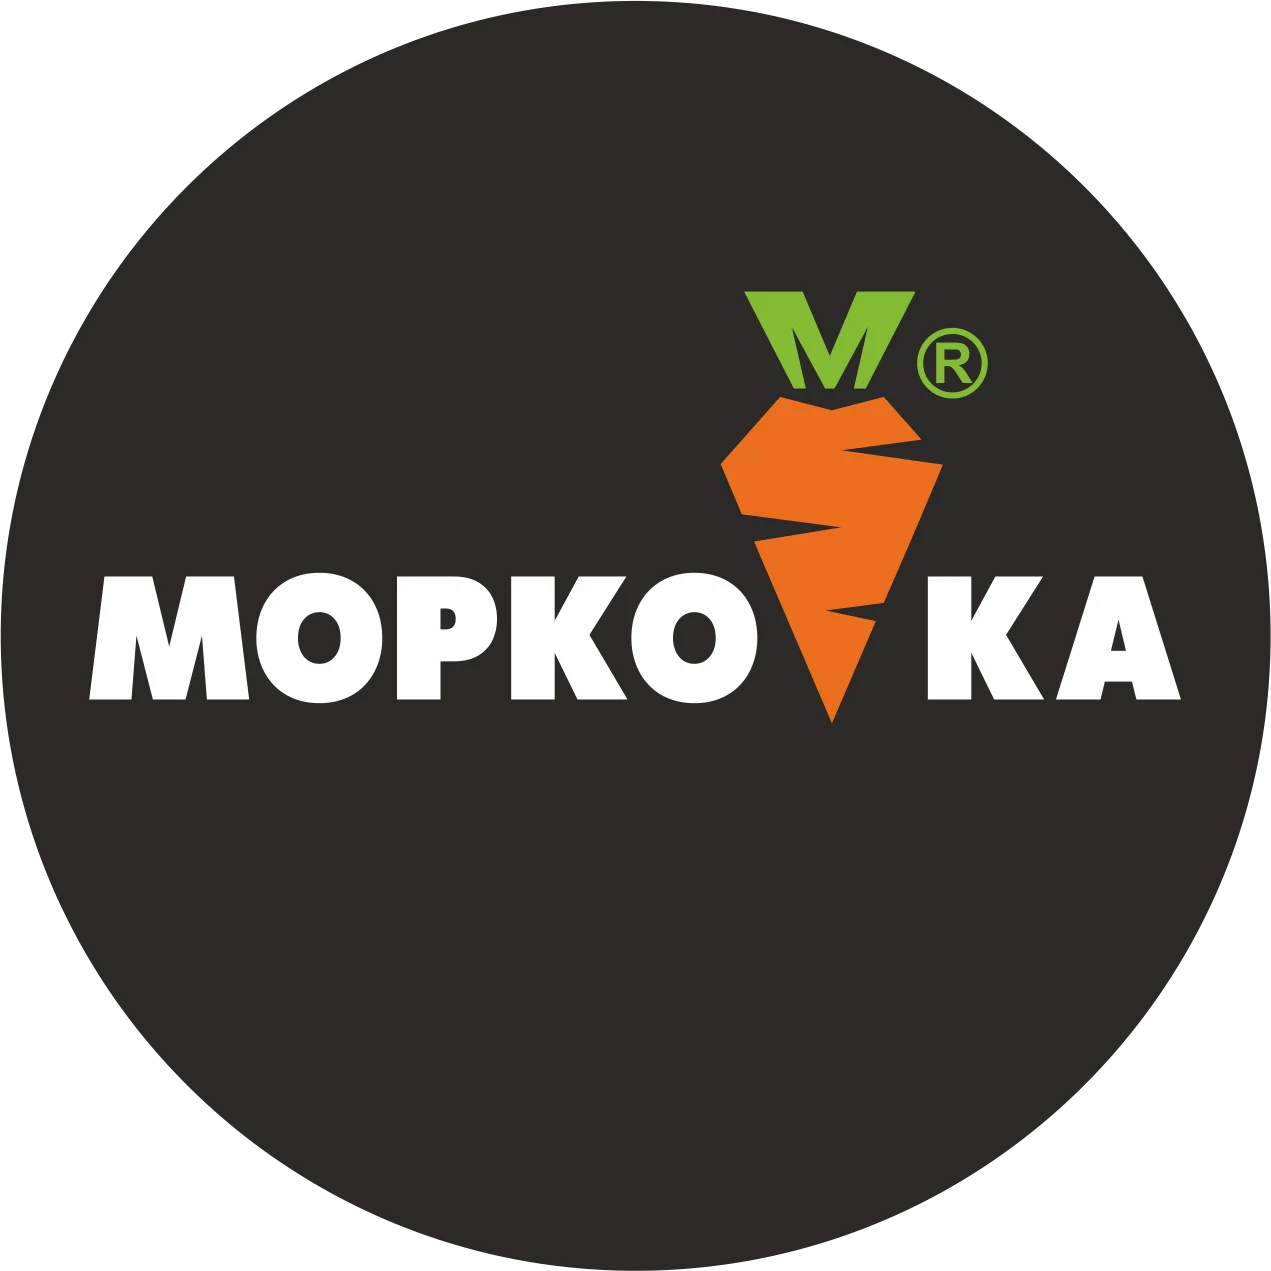 Morkovka